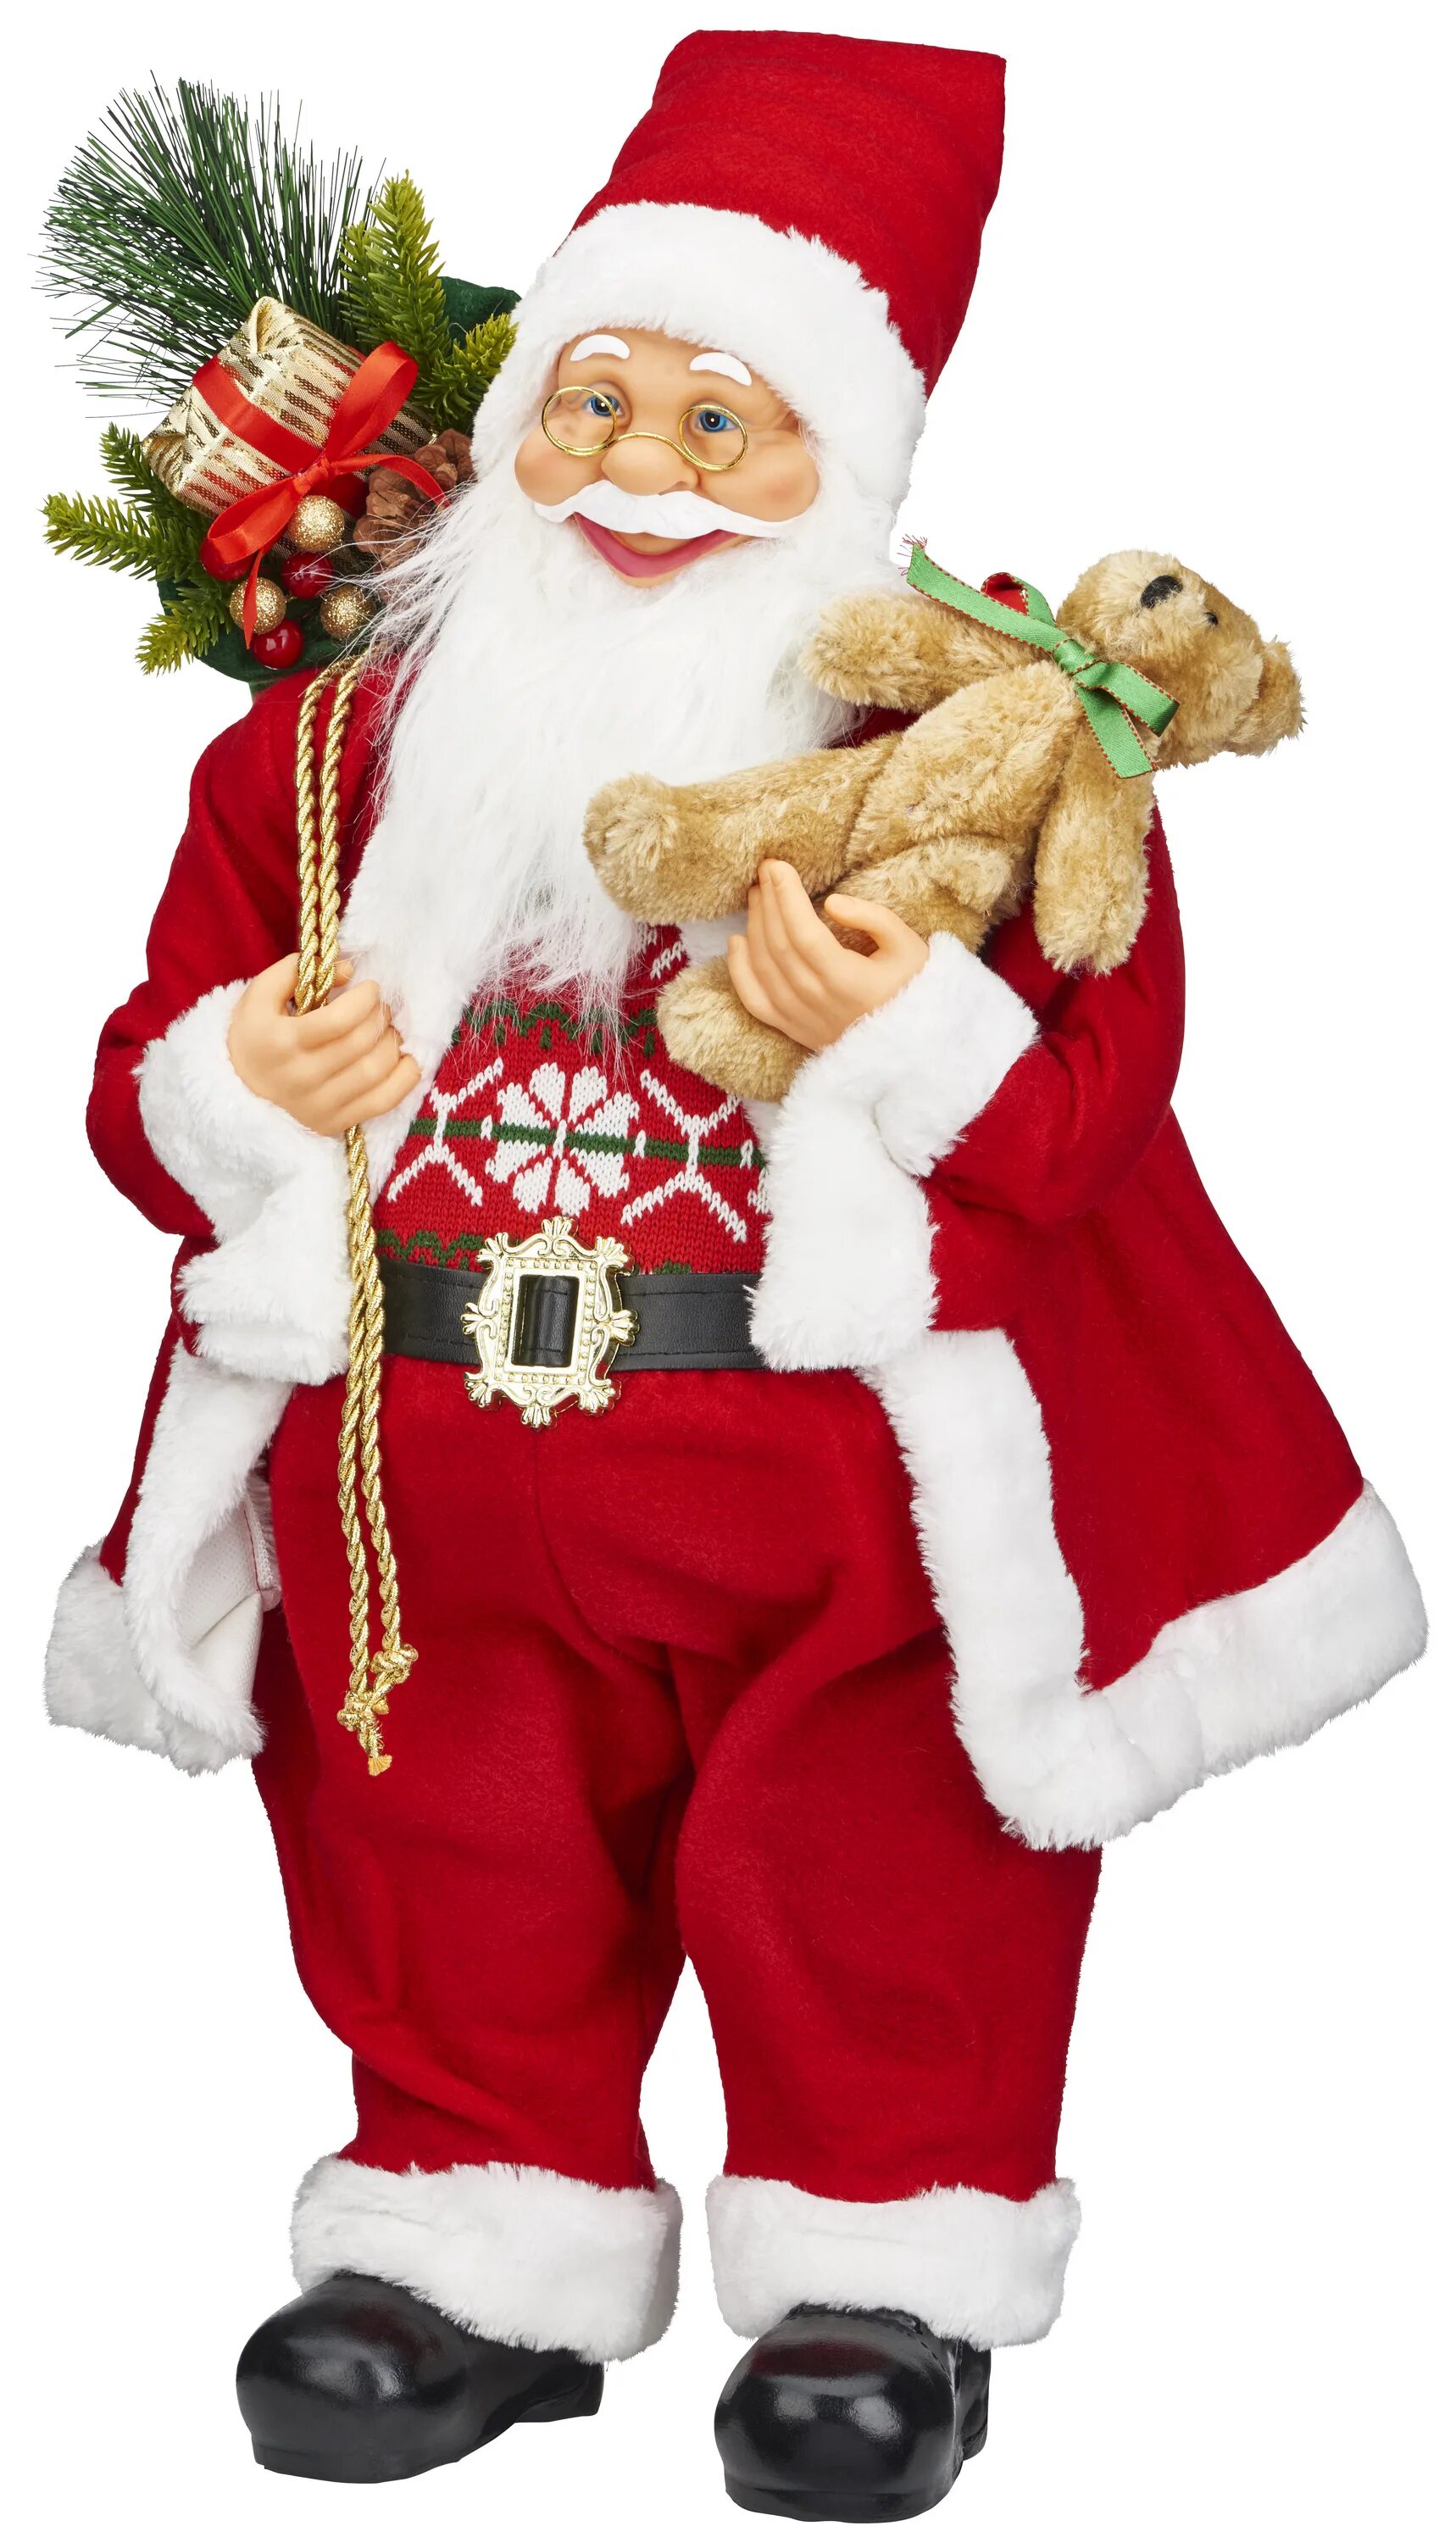 Ело пуки. Валберис дед Мороз Санта фигурка 60 см. Игрушка Санта Клауса 60см.